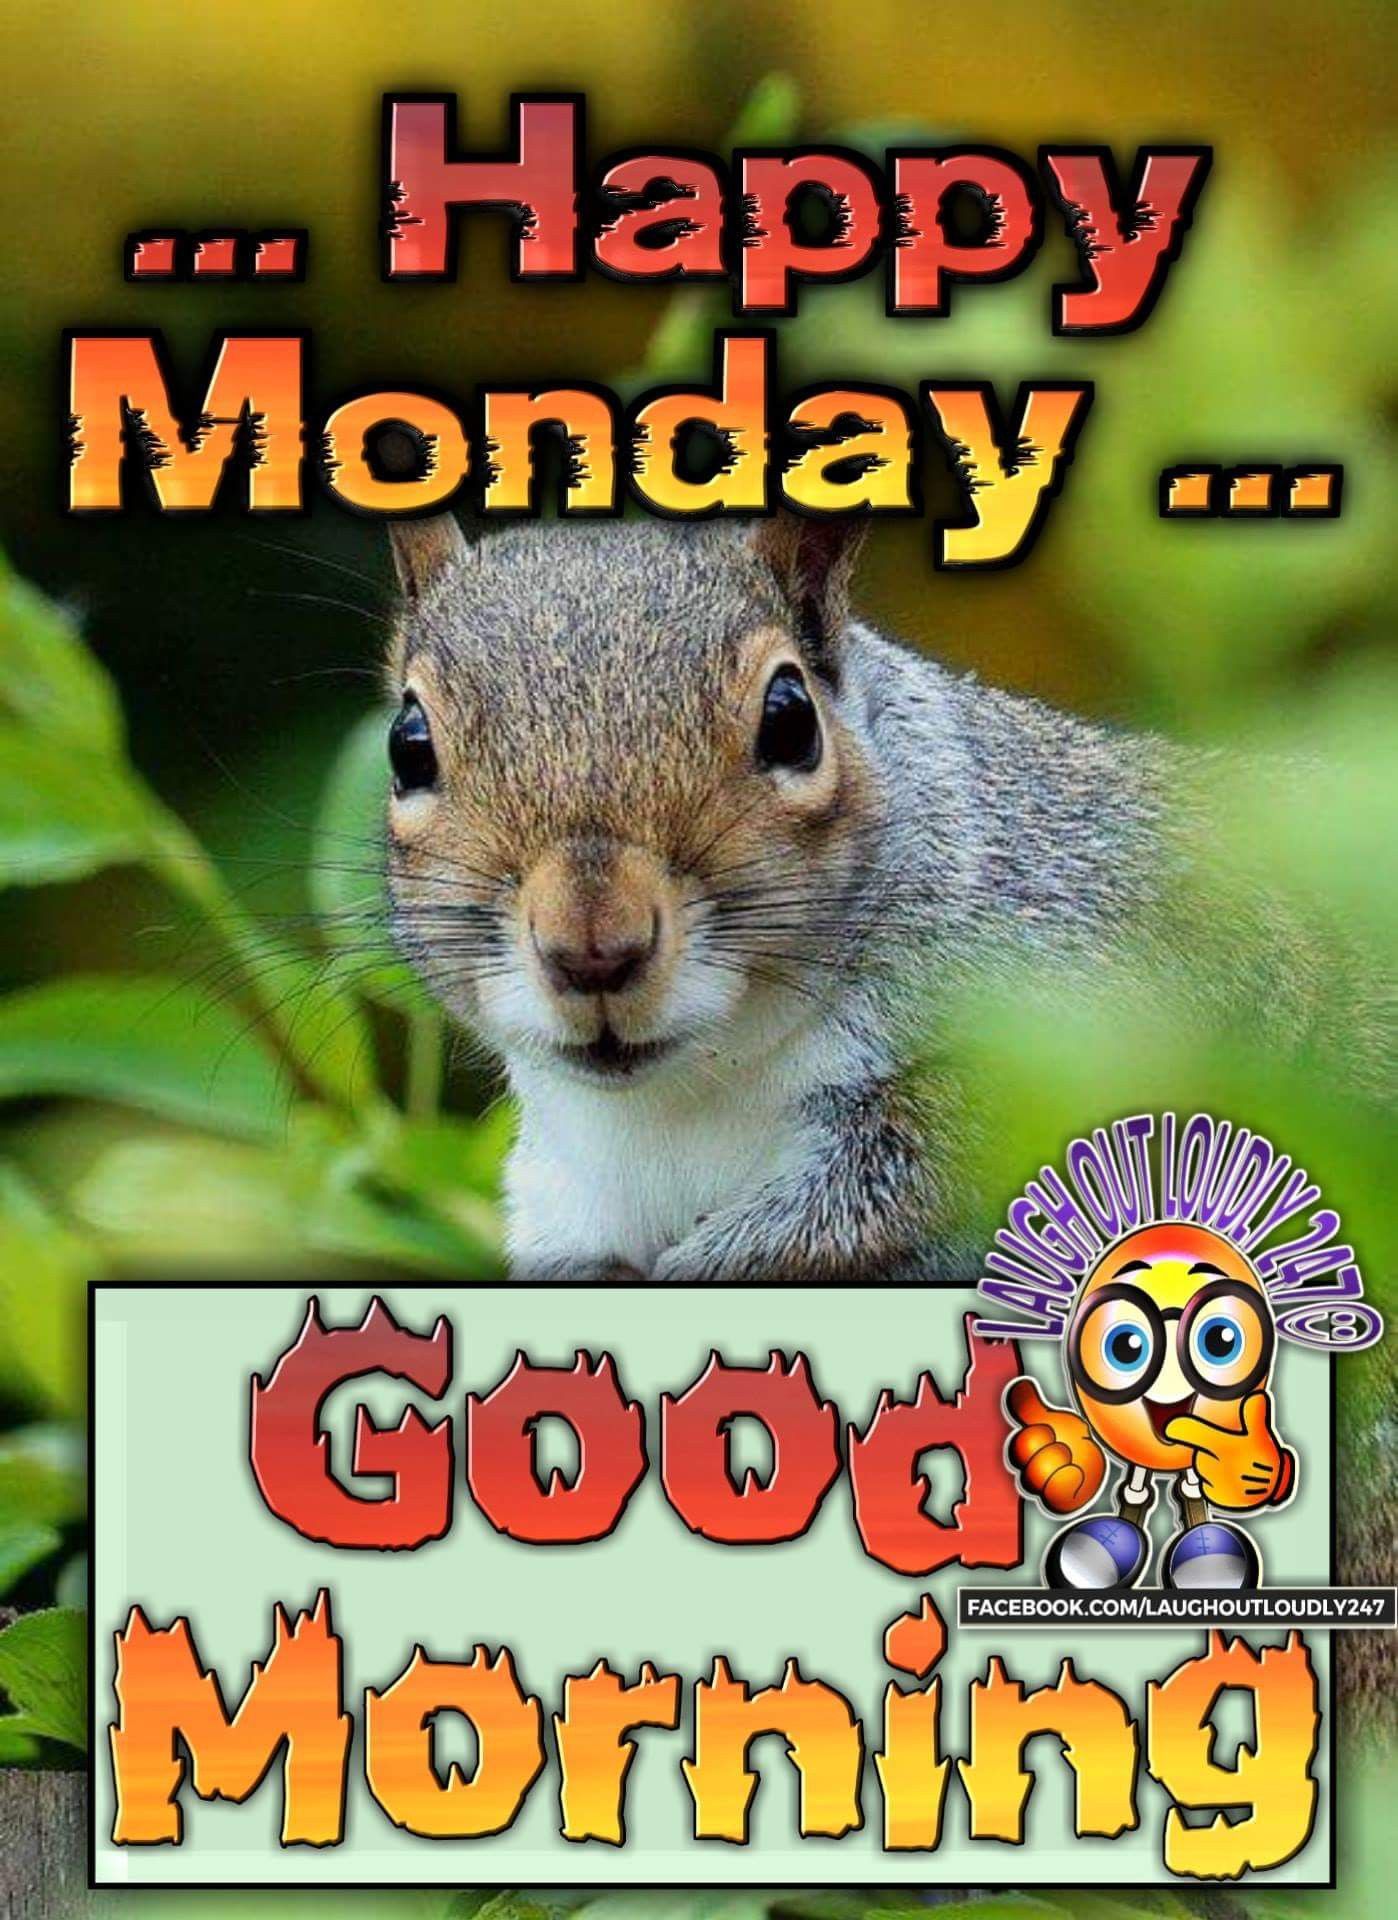 Happy Monday Photo Monday images - Happy Monday Photo Monday images